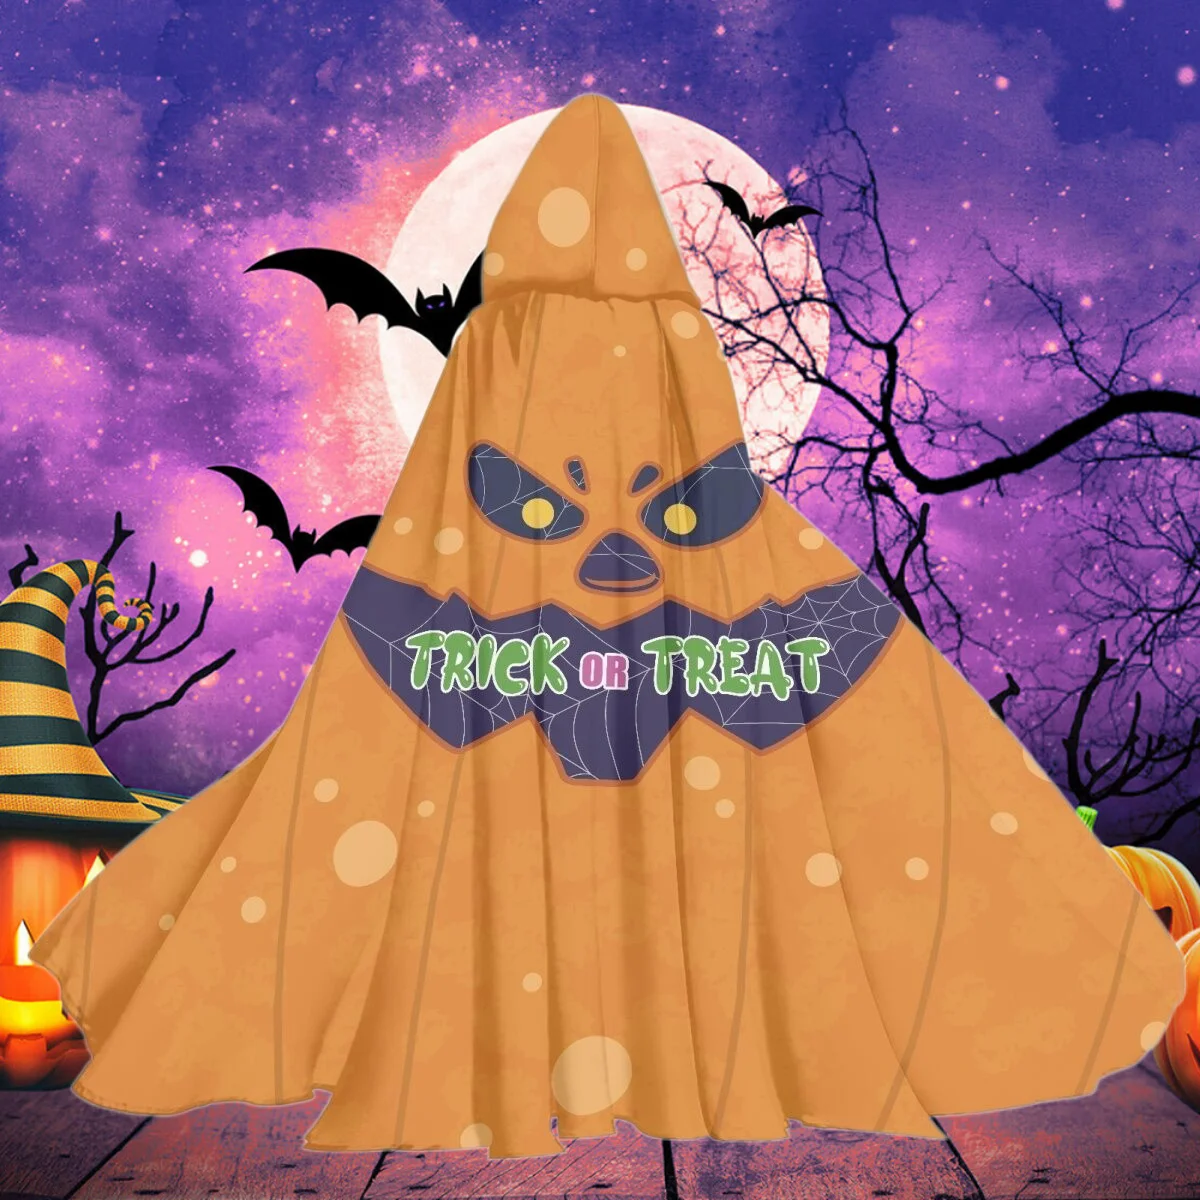 

Pumpkin Evil Smile Design Hooded Cloak Coat Medieval Women Vintage Gothic Cape Coat Long Trench Halloween Ghost Cosplay Costume